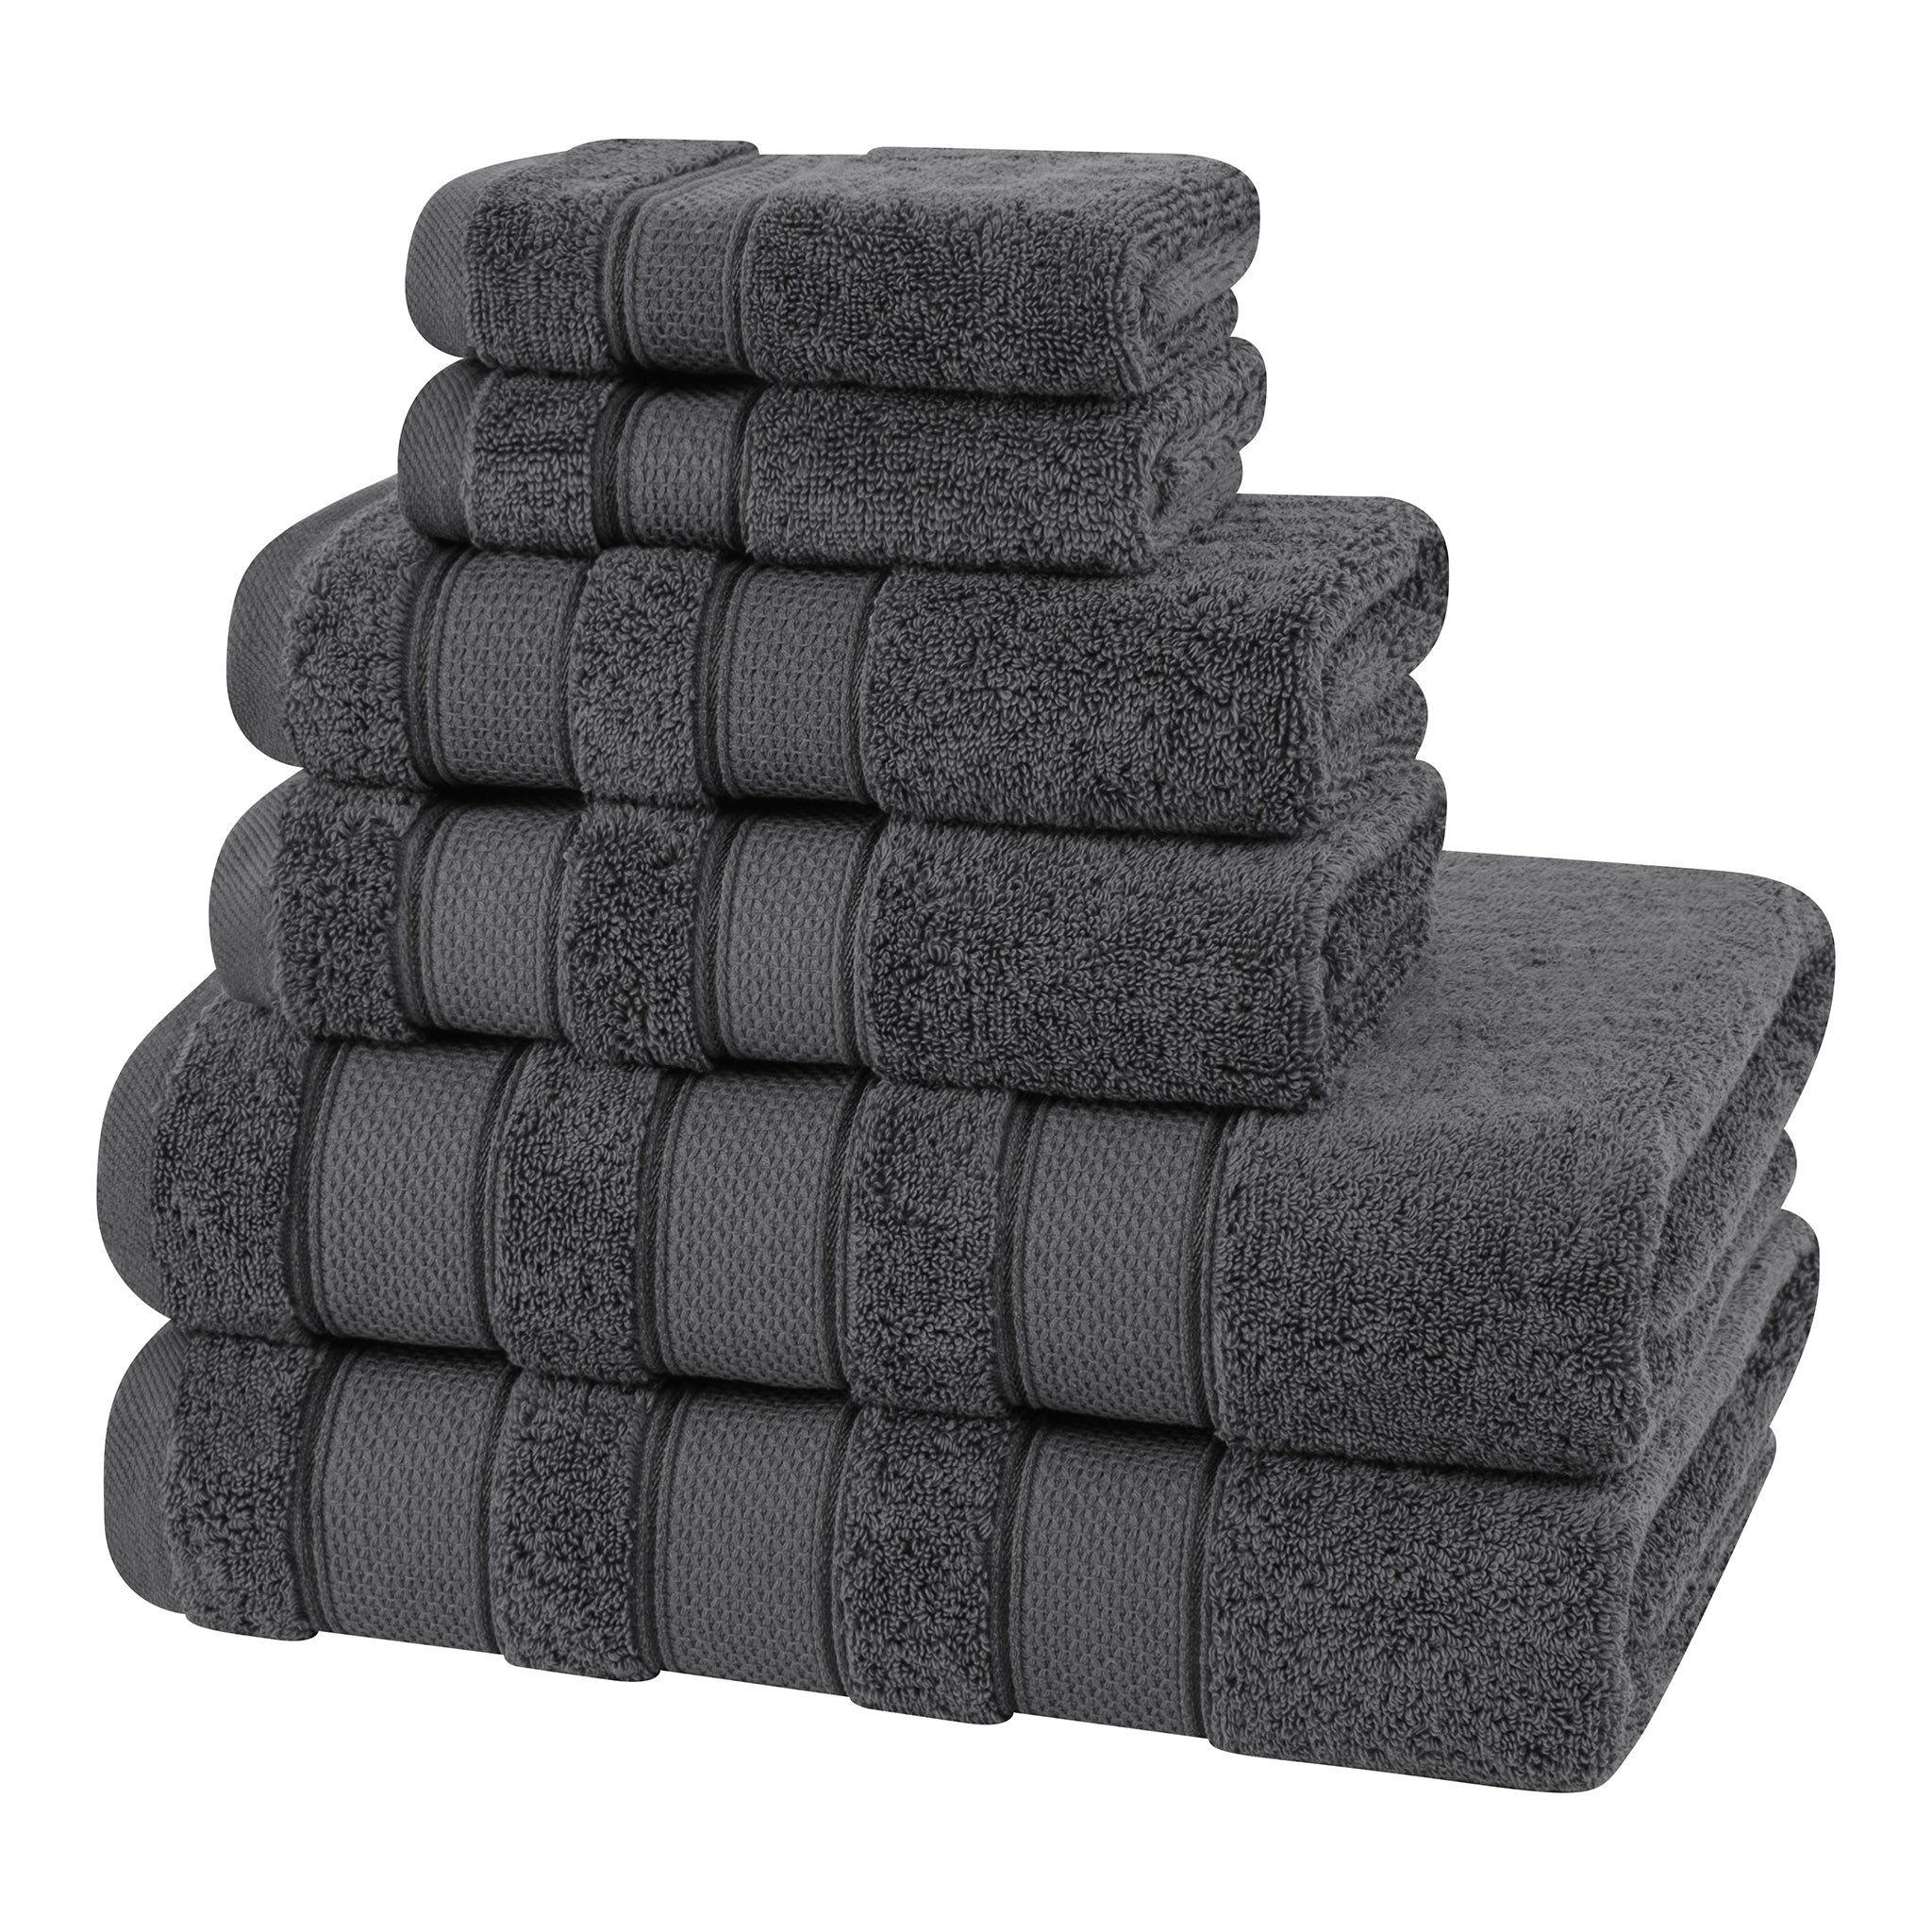 Luxury Cotton Bath Towels Large | Hotel Bathroom Towel | 27x54 | 4 Pack | Black, Size: 27 x 54